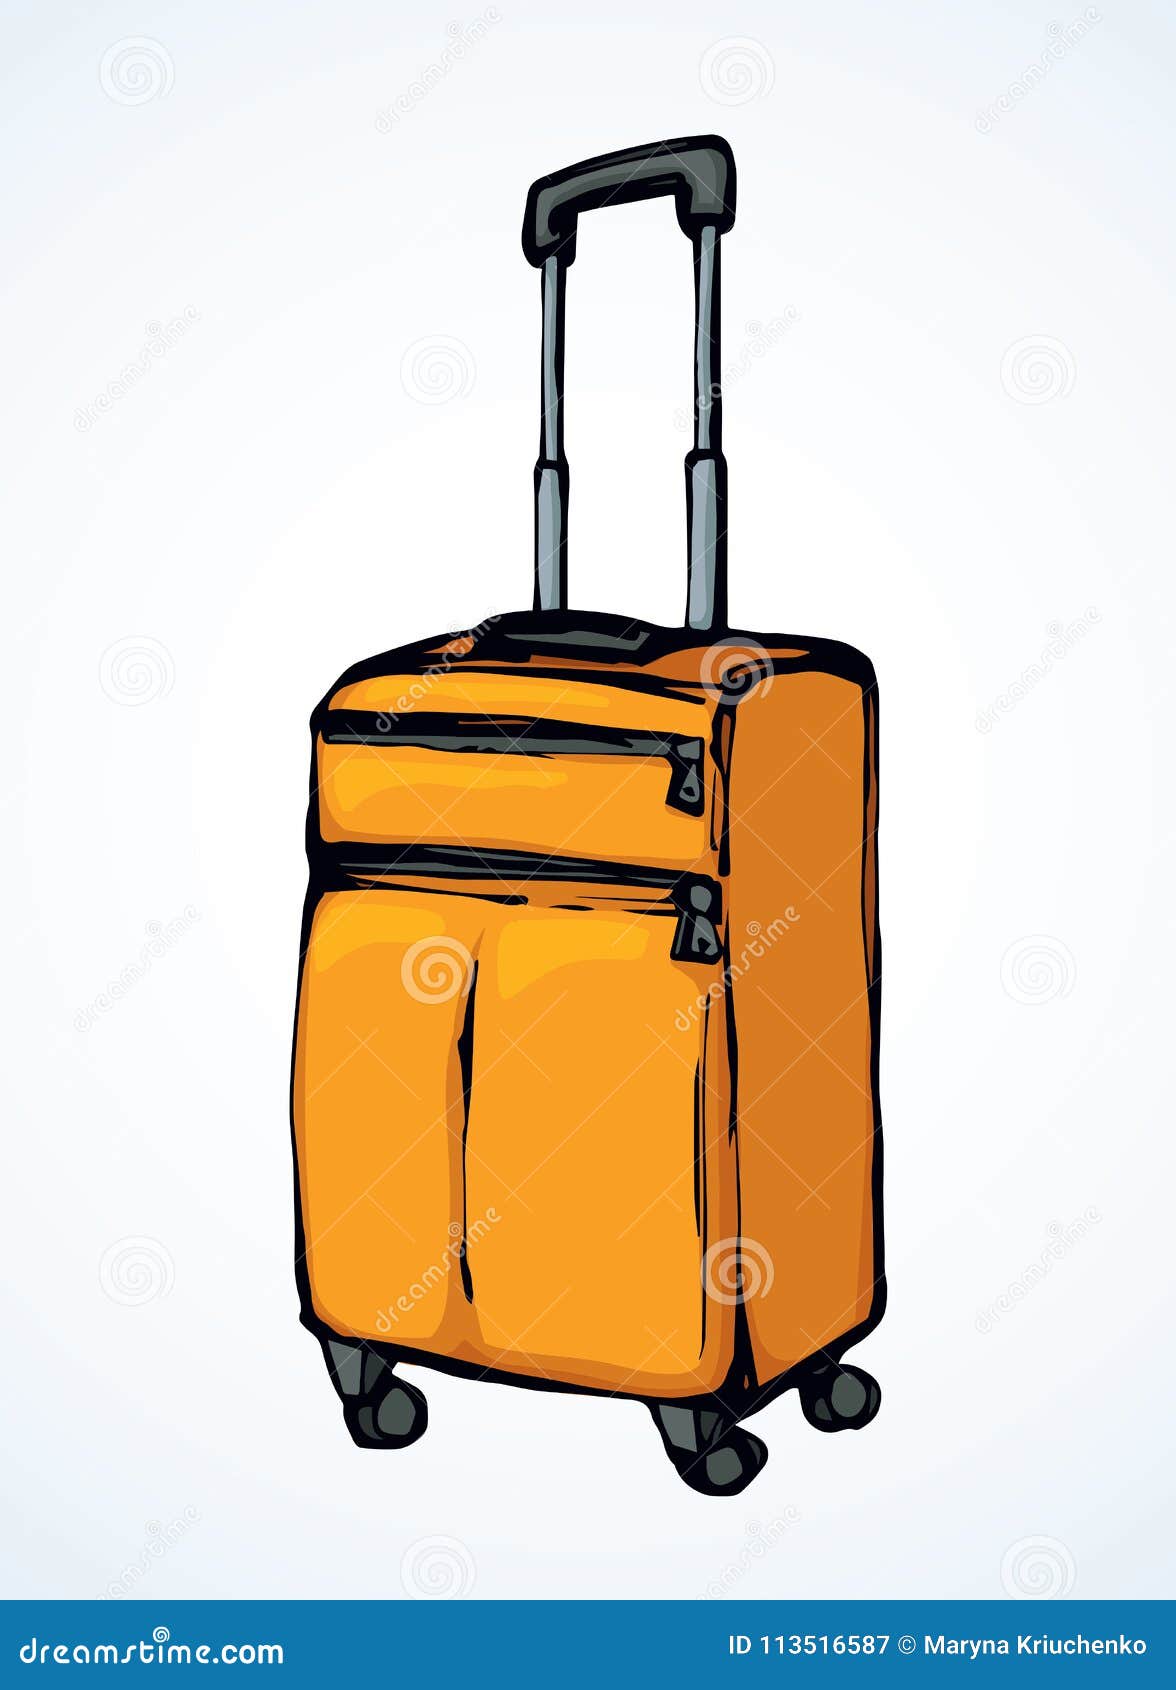 Suitcase geo travel airplane symbol creative logo Vector Image